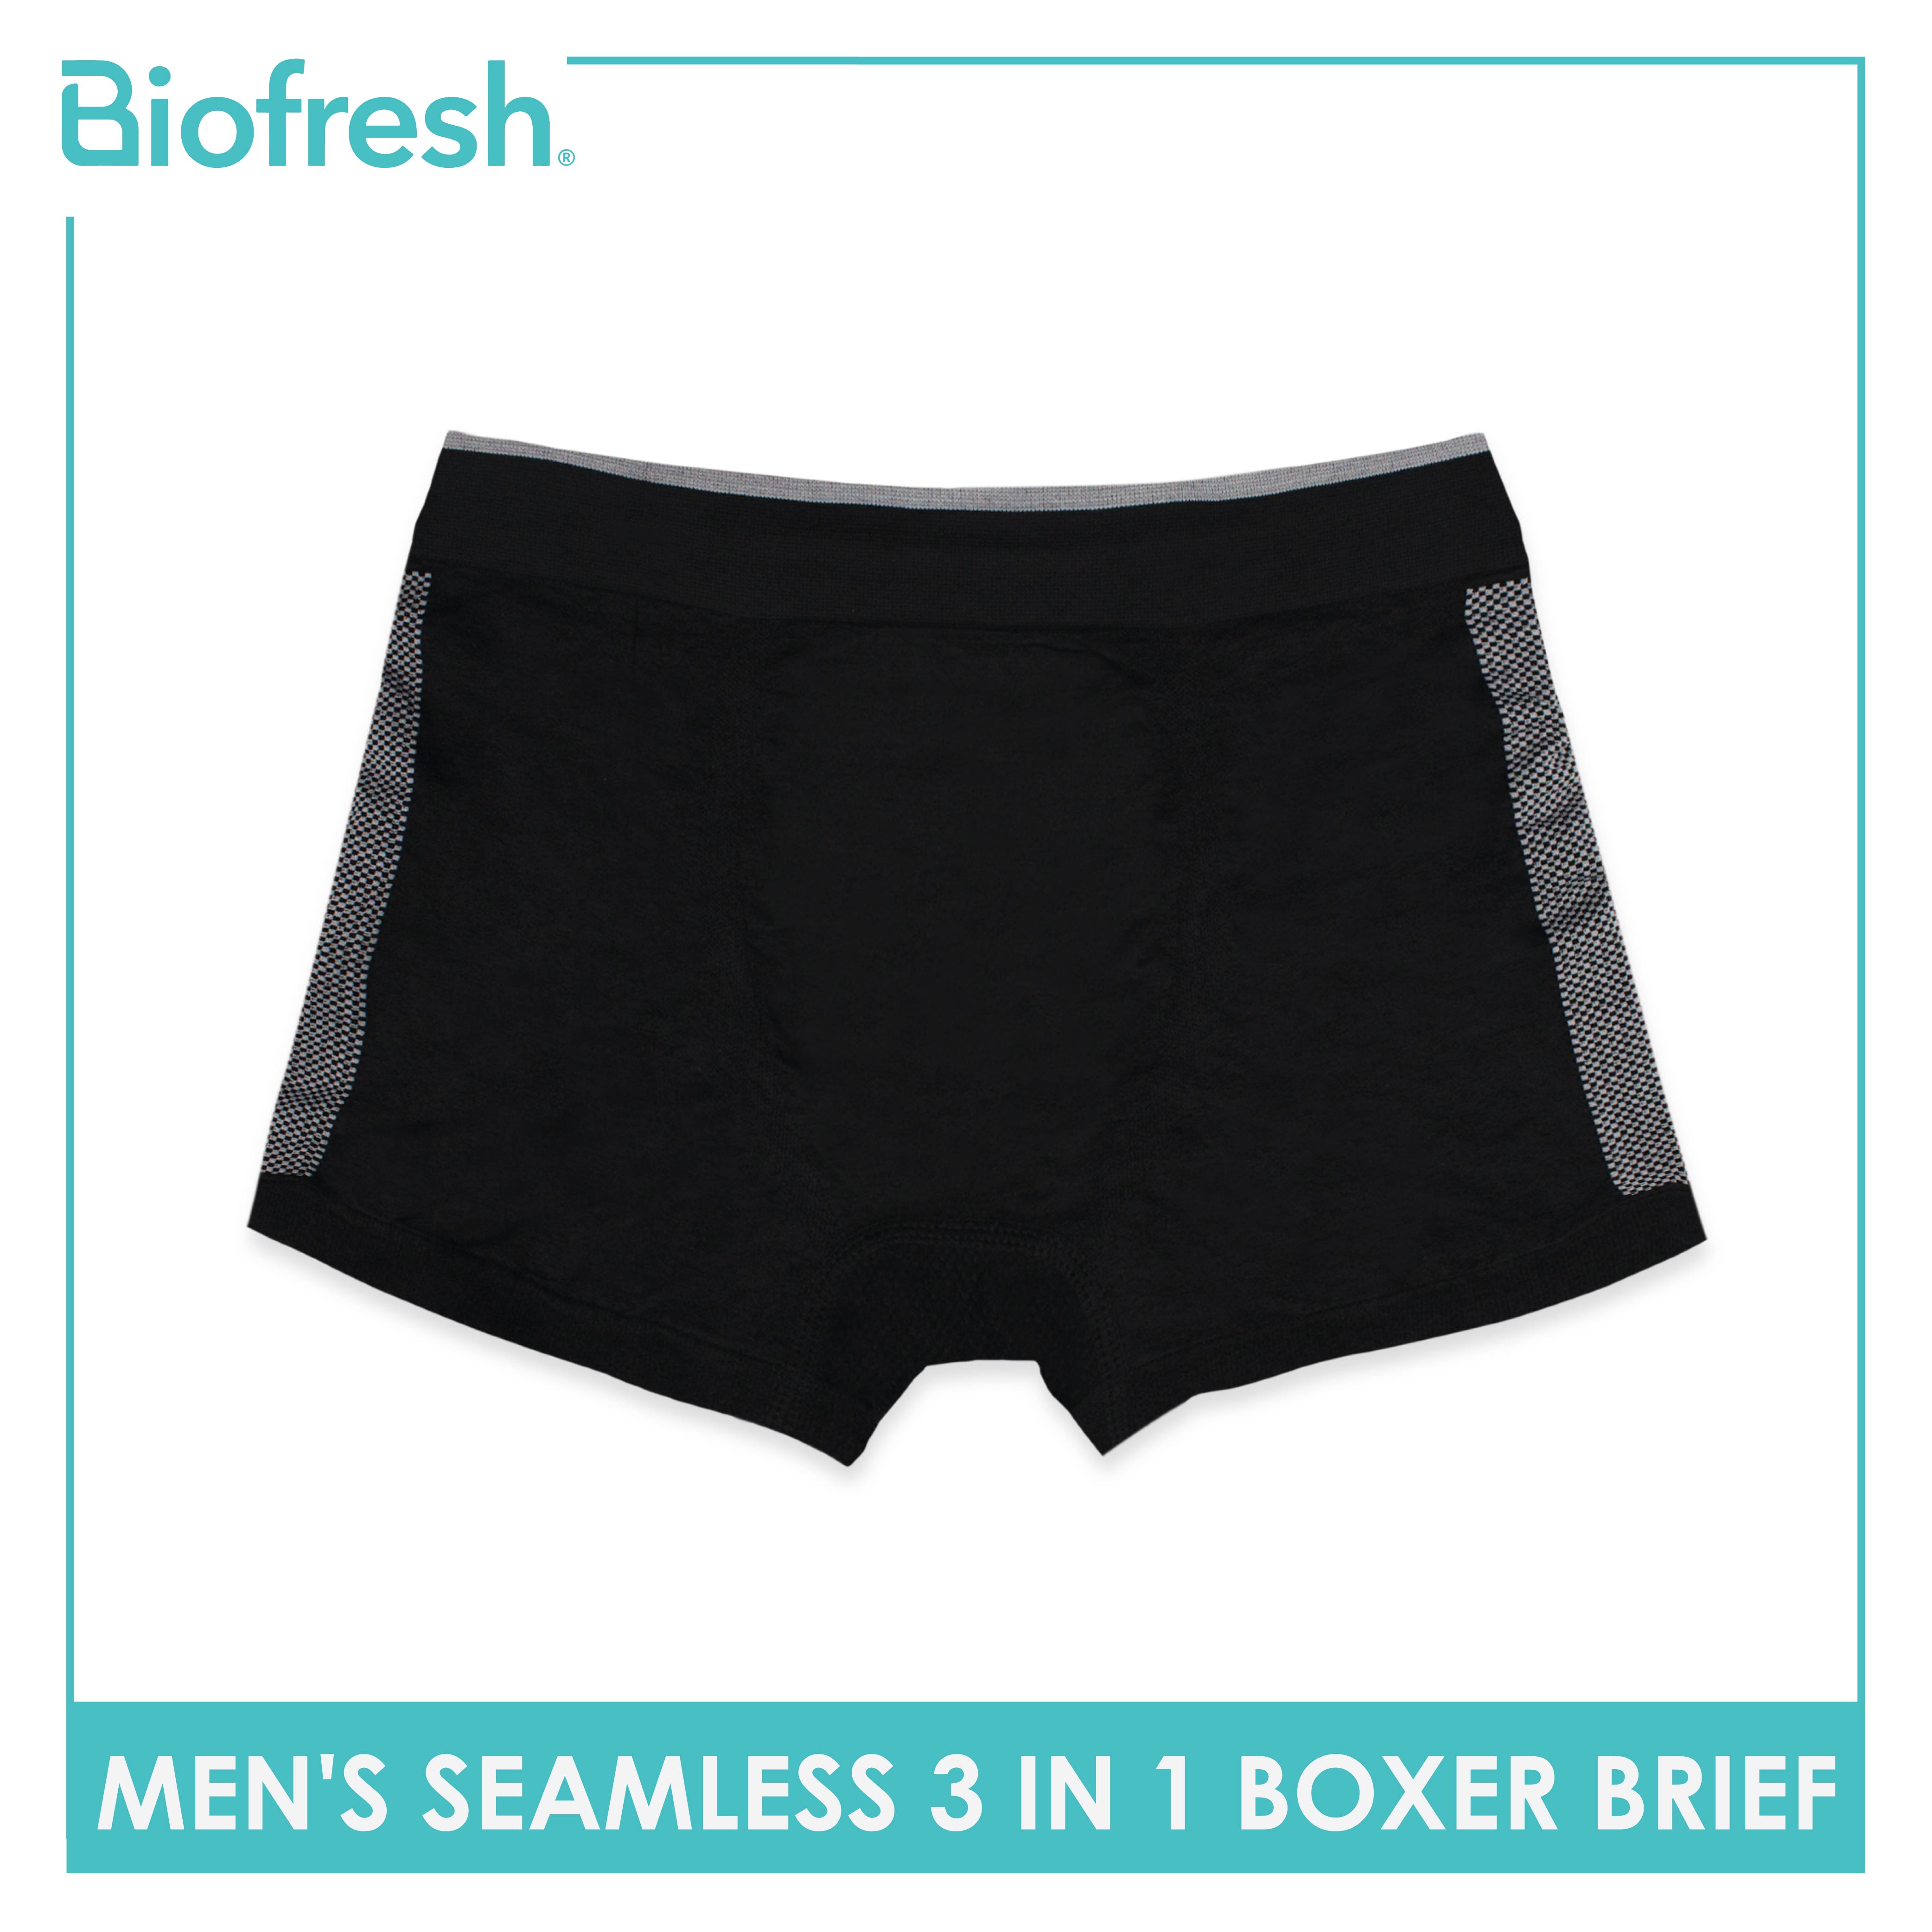 Buy Biofresh Biofresh Microair Men's Sports Bikini Brief 1 piece